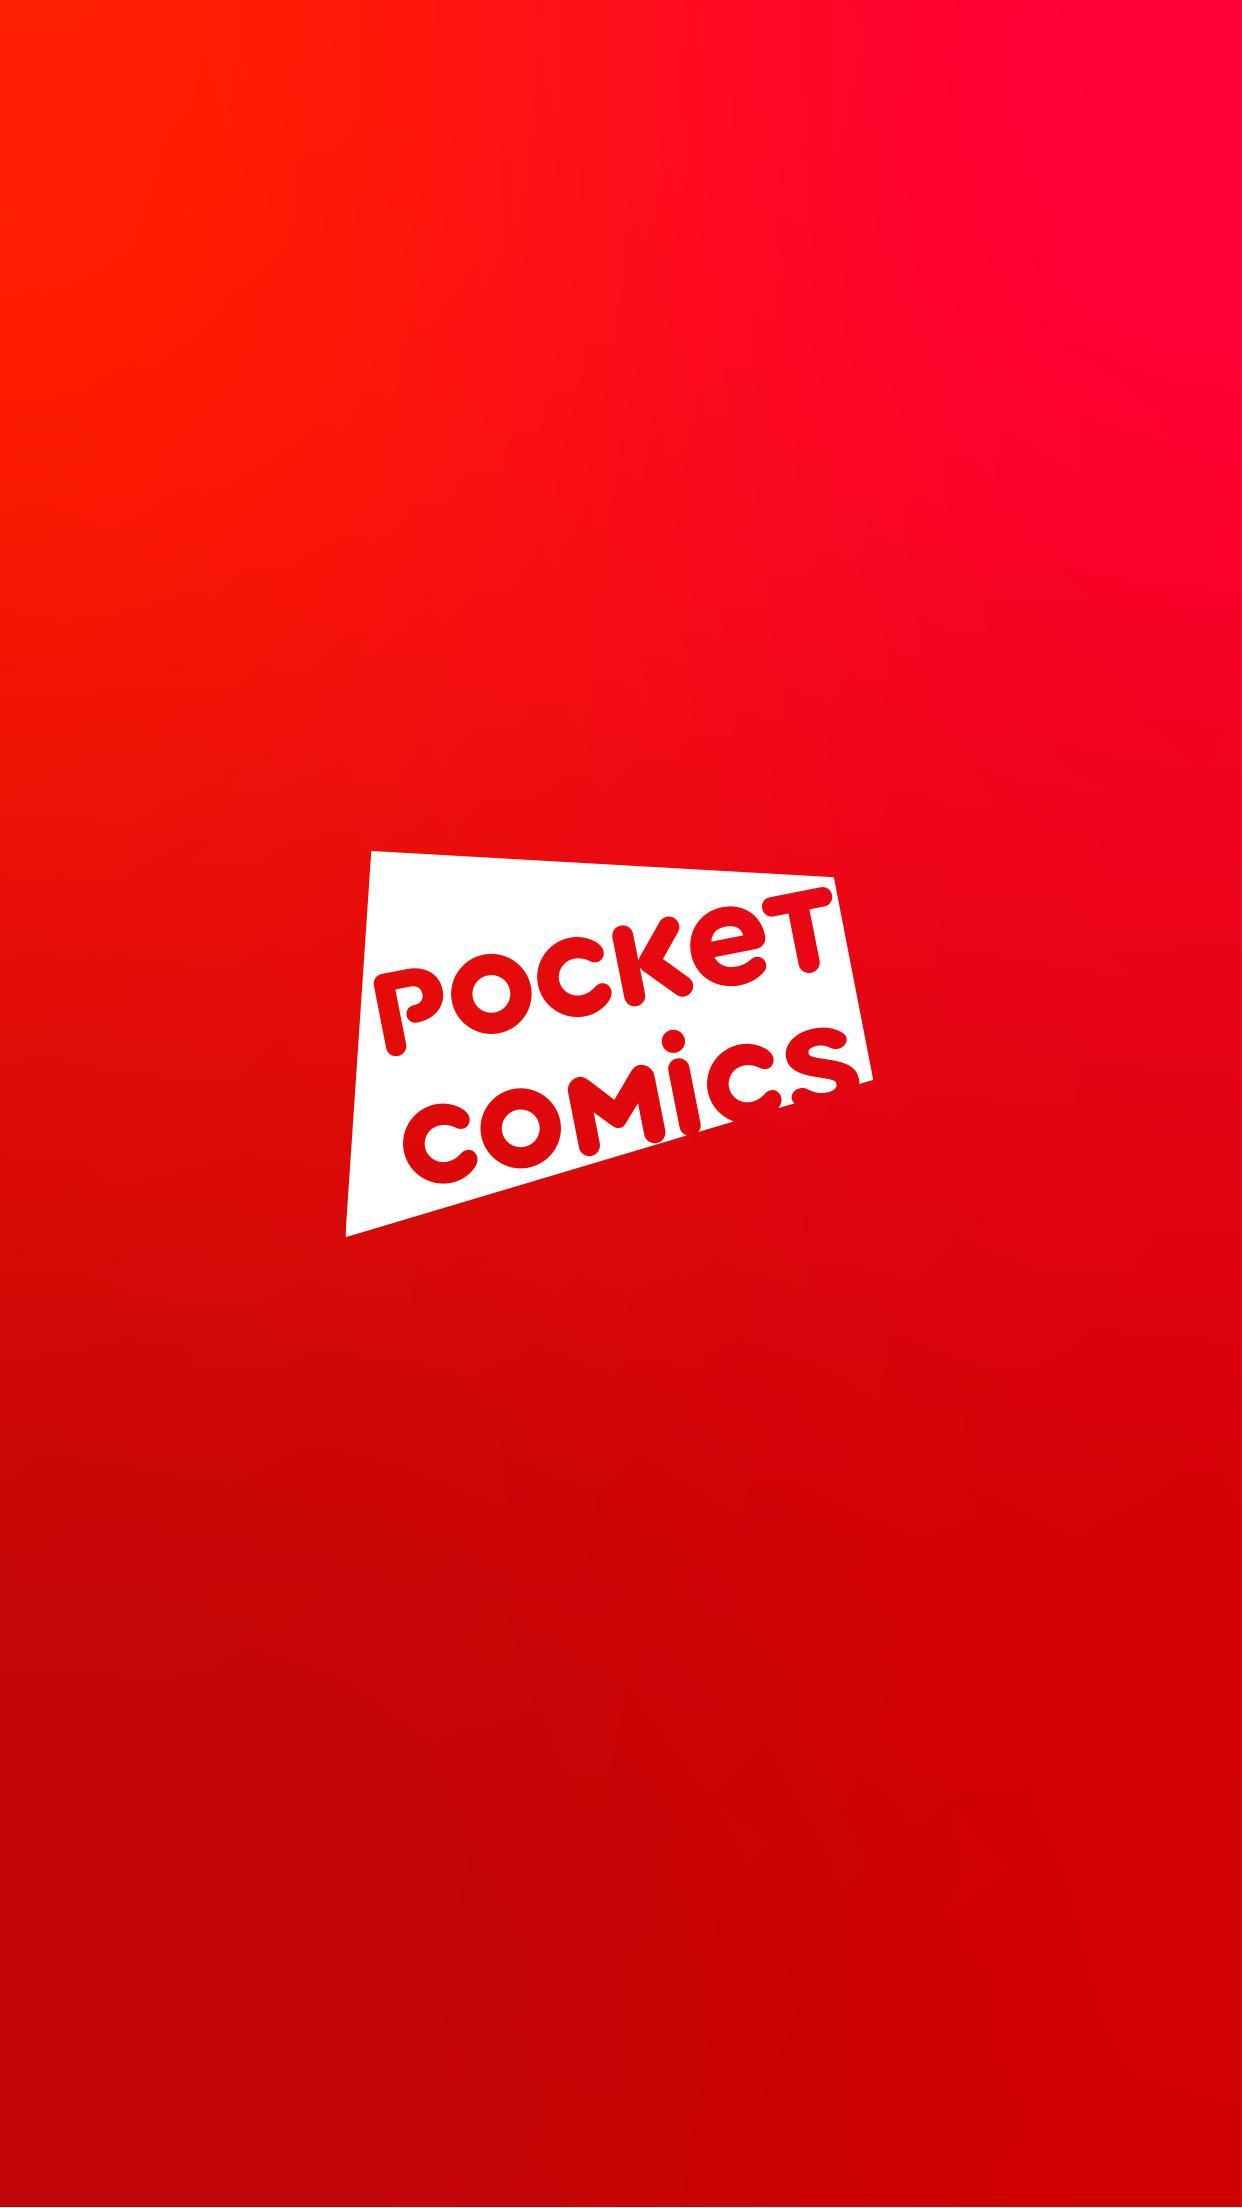 Pocket Comics - Premium Webtoon 1.3.2 Screenshot 5